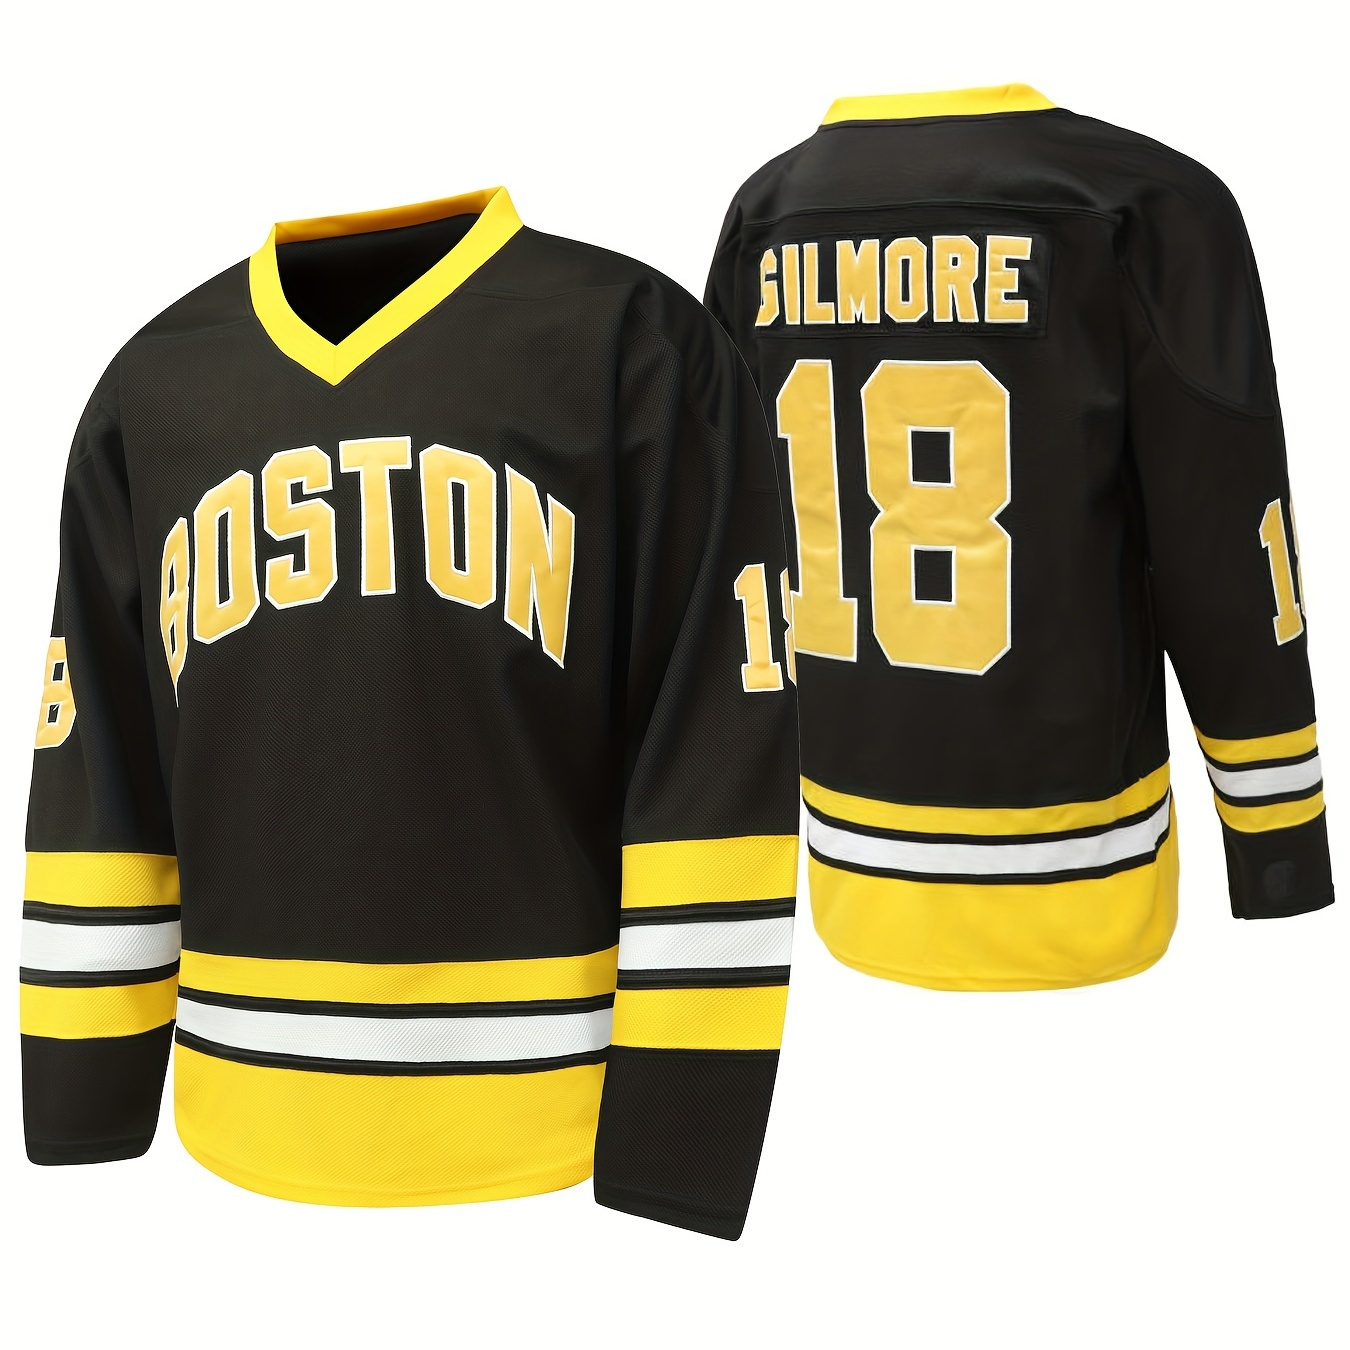 

Men's Boston #18 Embroidery Ice Hockey Jersey, Vintage Stripe V Neck Long Sleeve Uniform Hockey Shirt For Training Competition Size S-xxxl